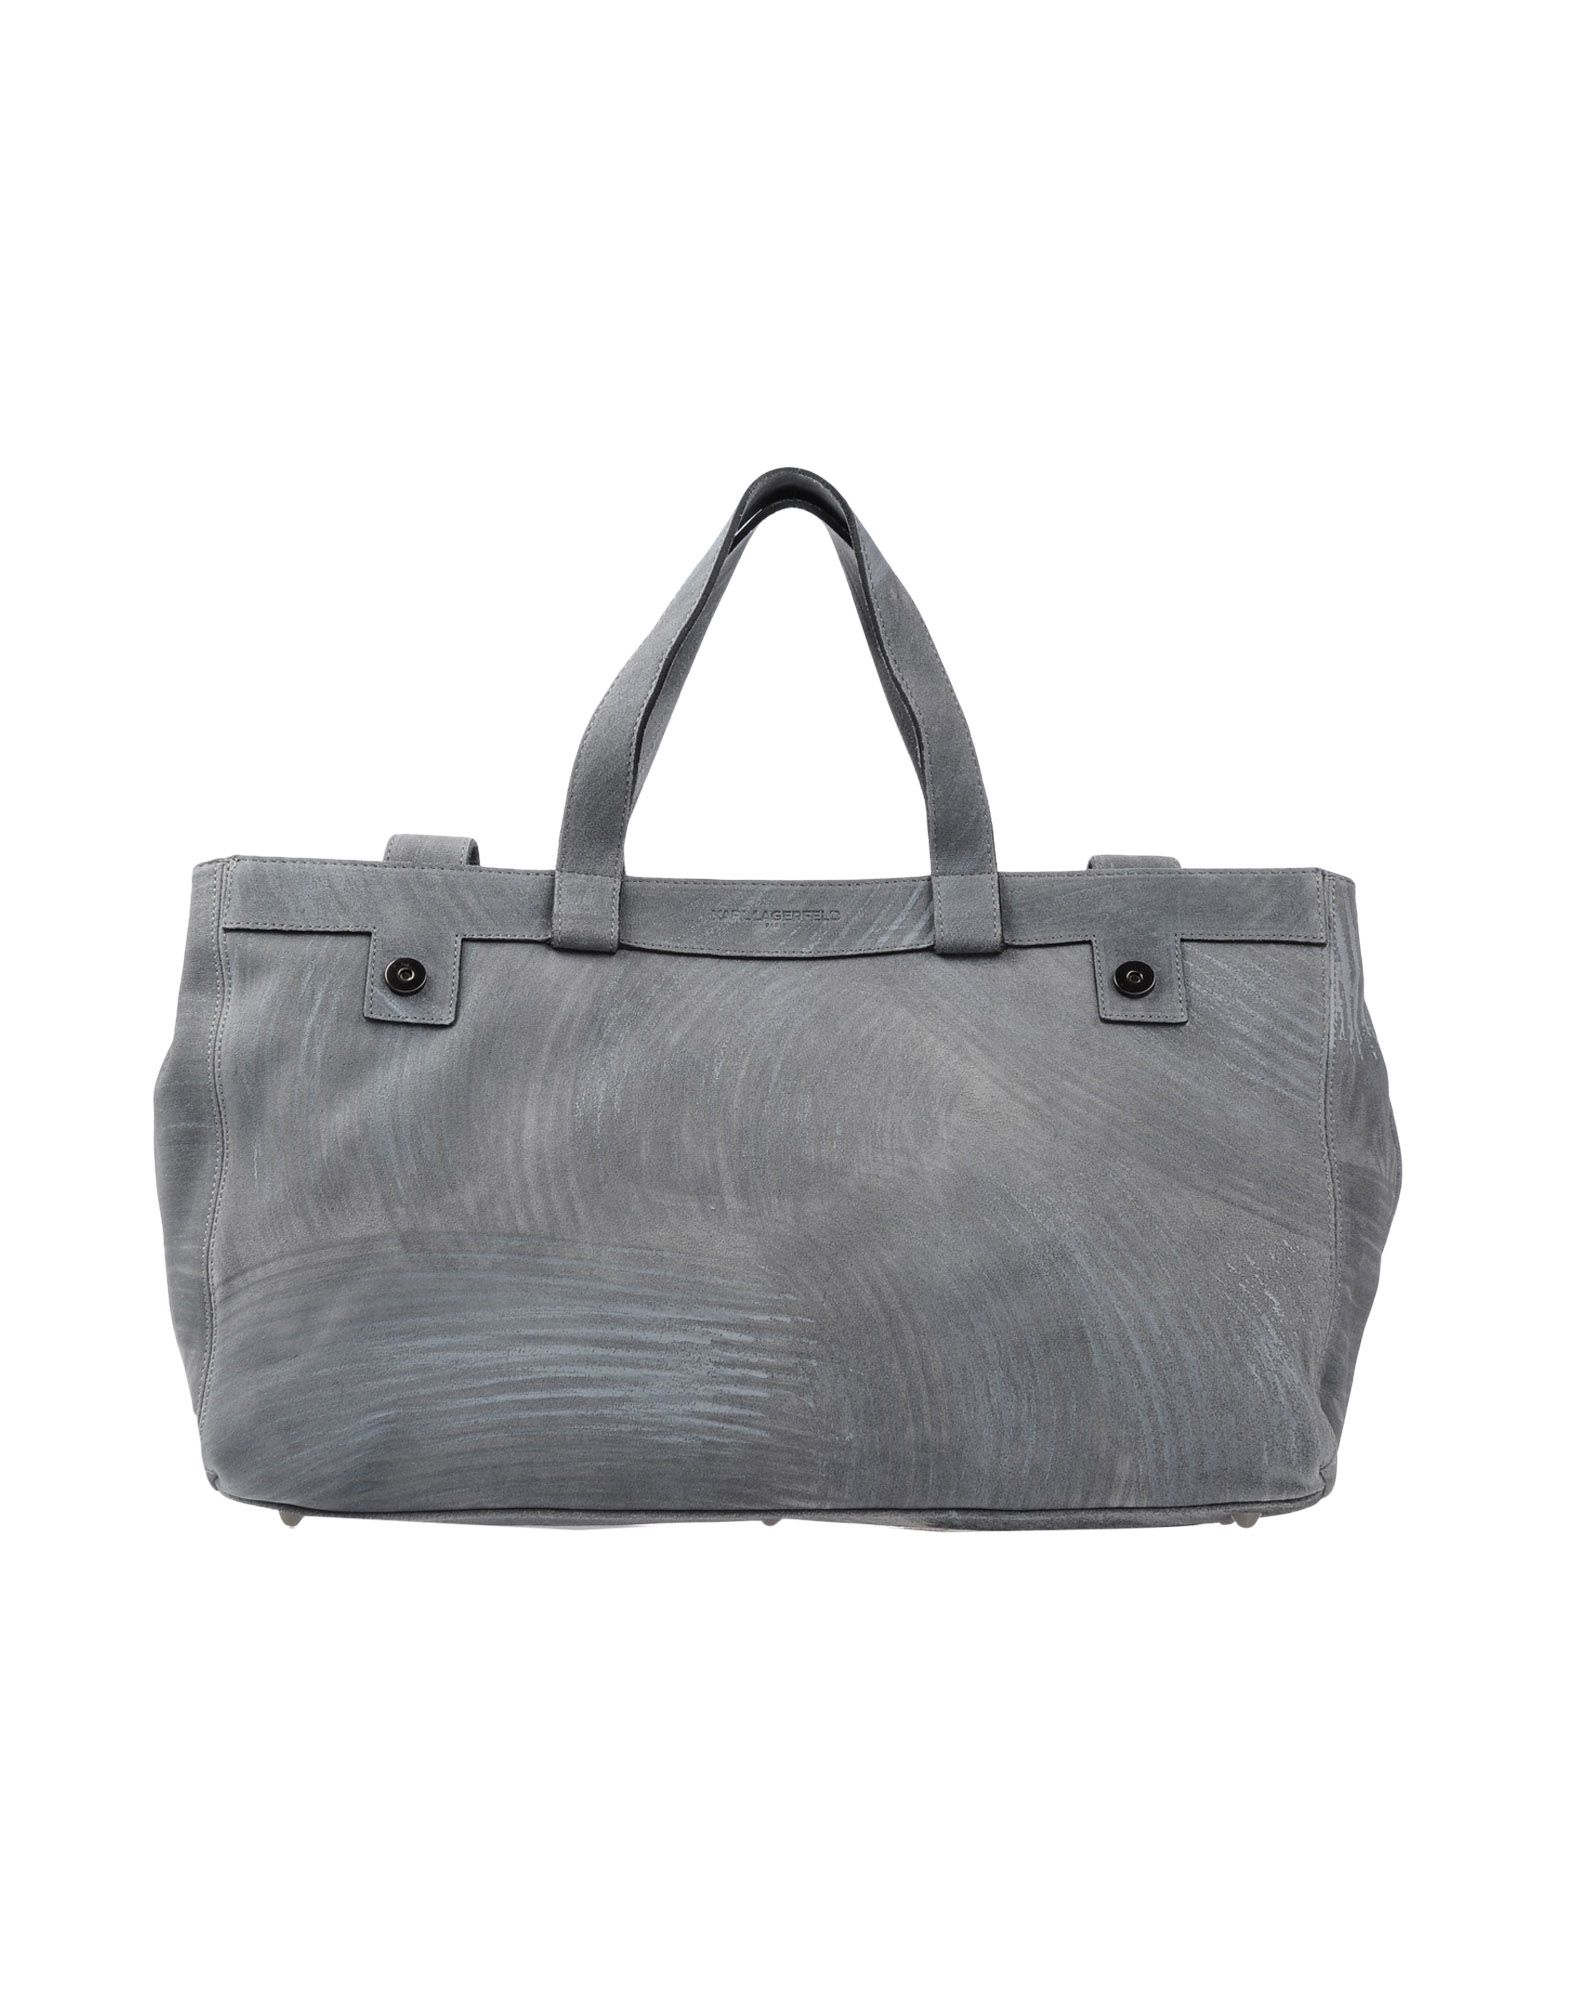 Lyst - Karl Lagerfeld Handbag in Gray